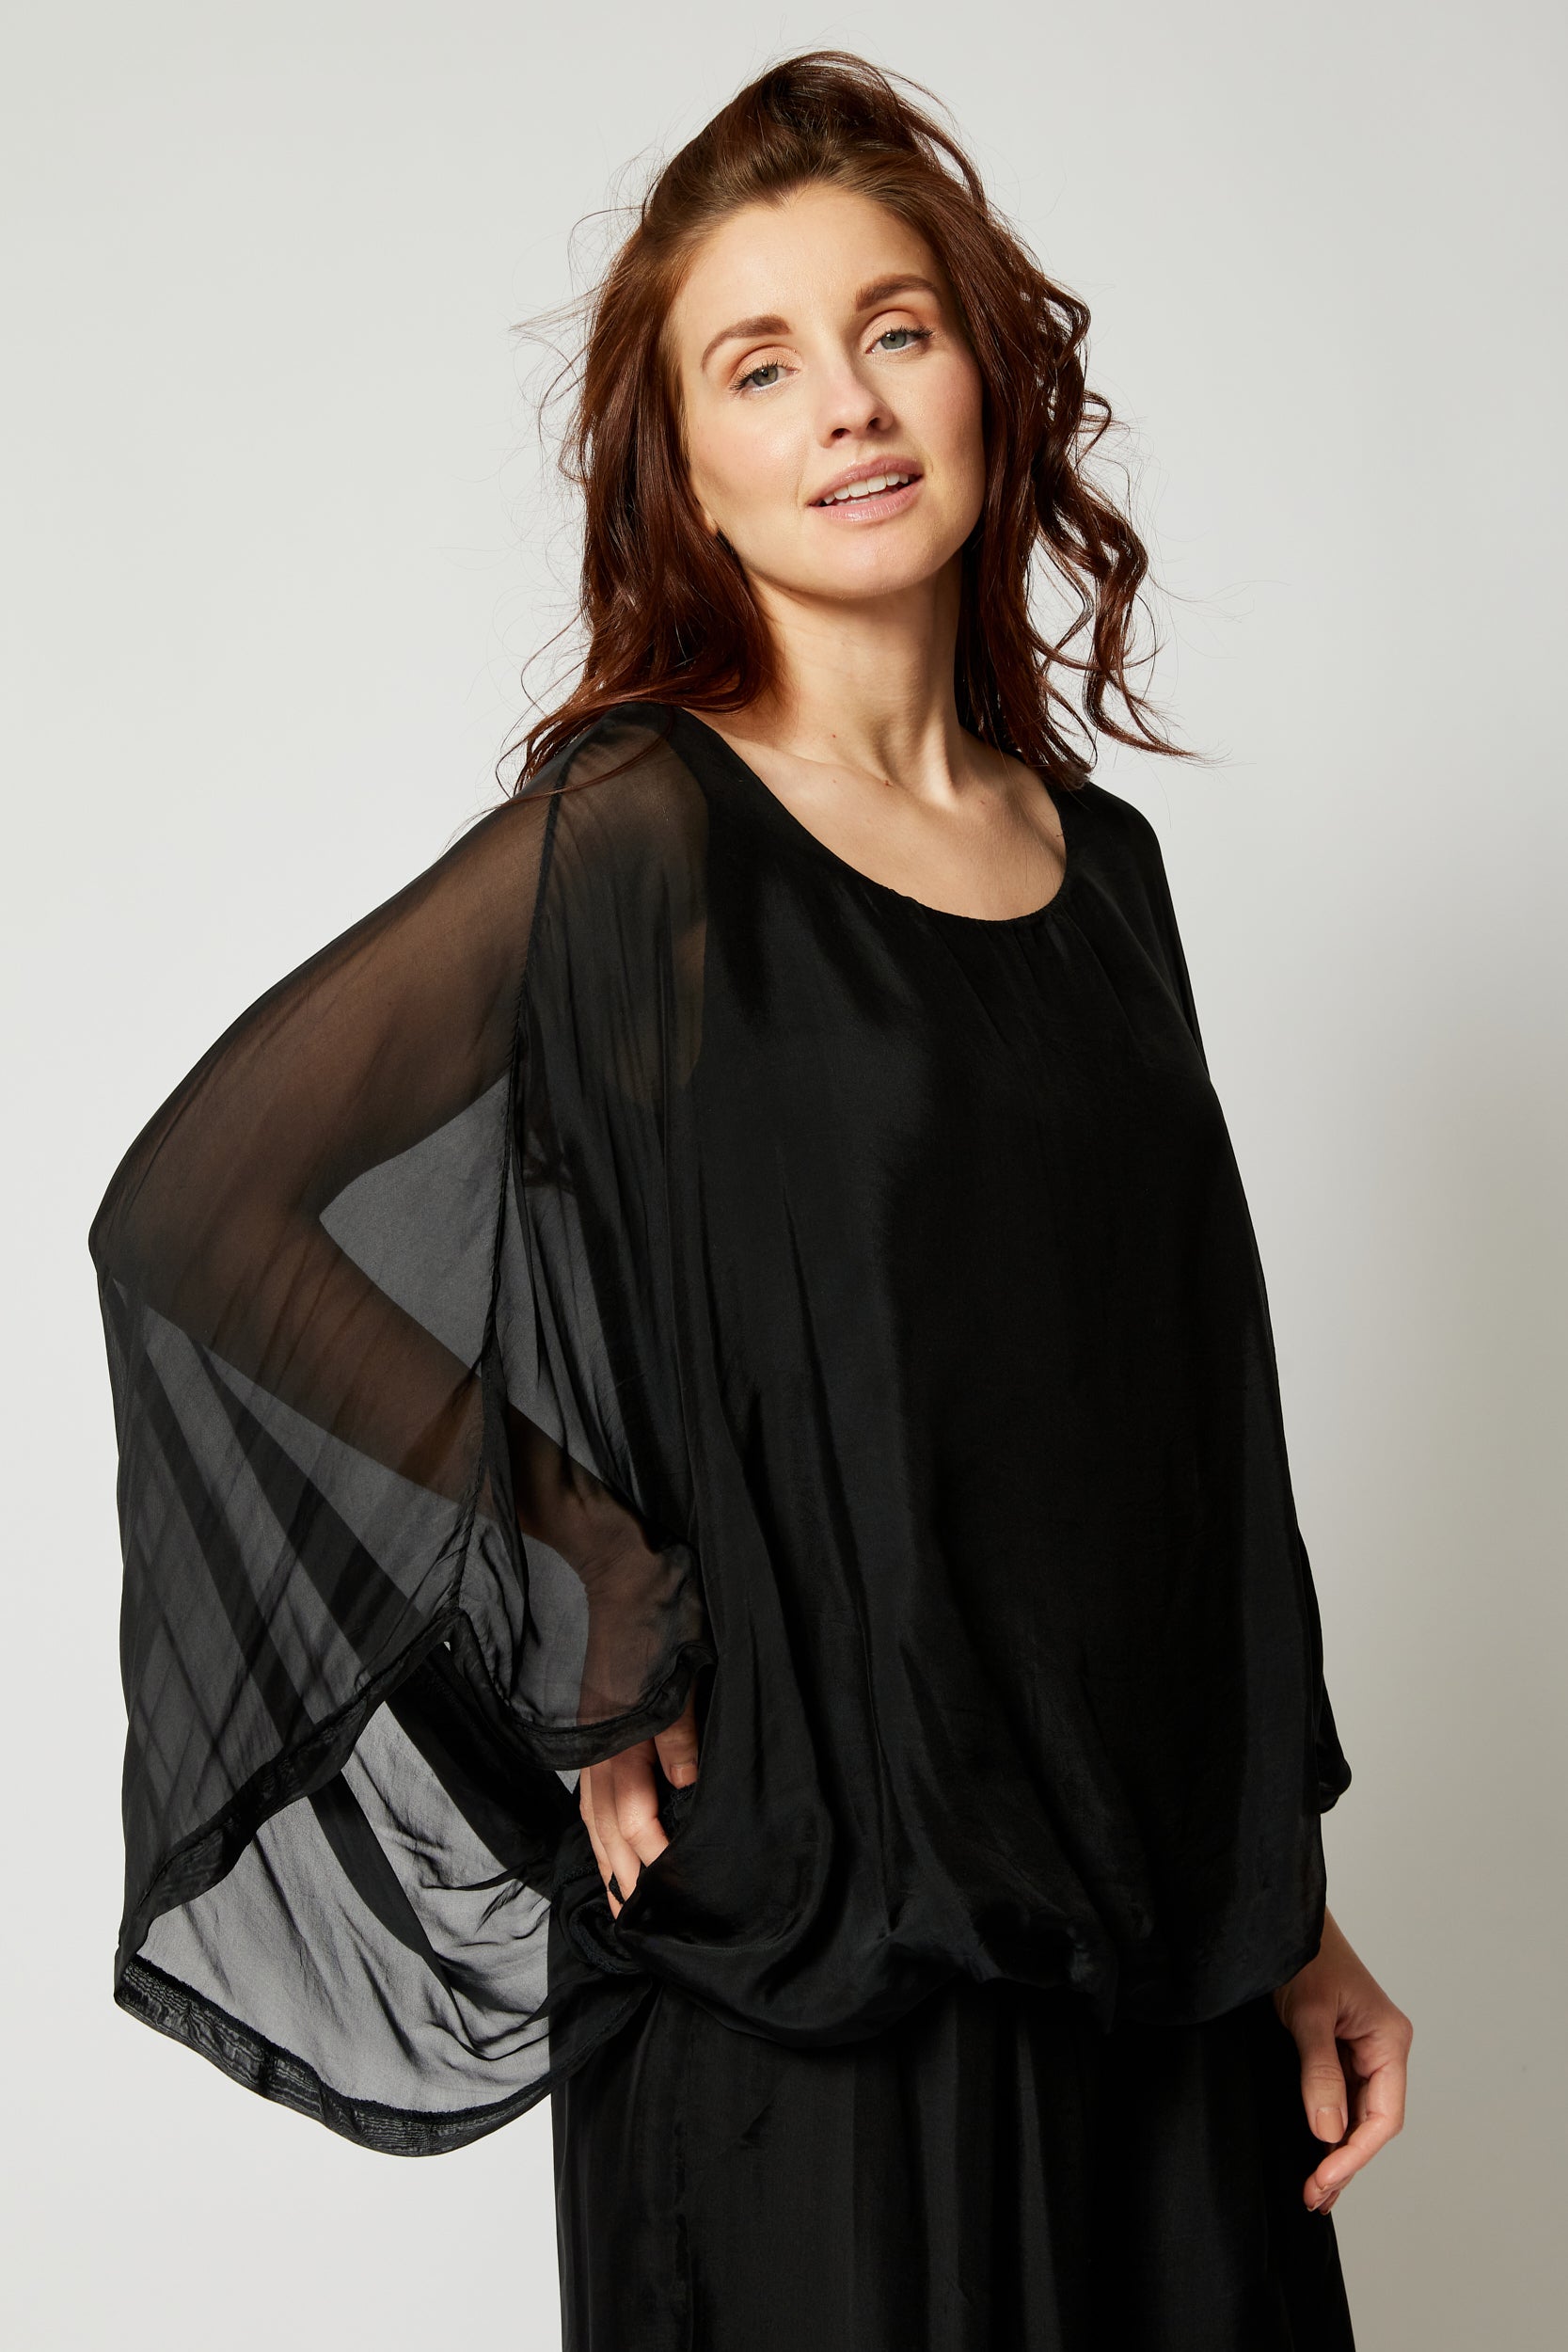 Italian Silk Top w/ Drape Under Arm - Jacqueline B Clothing